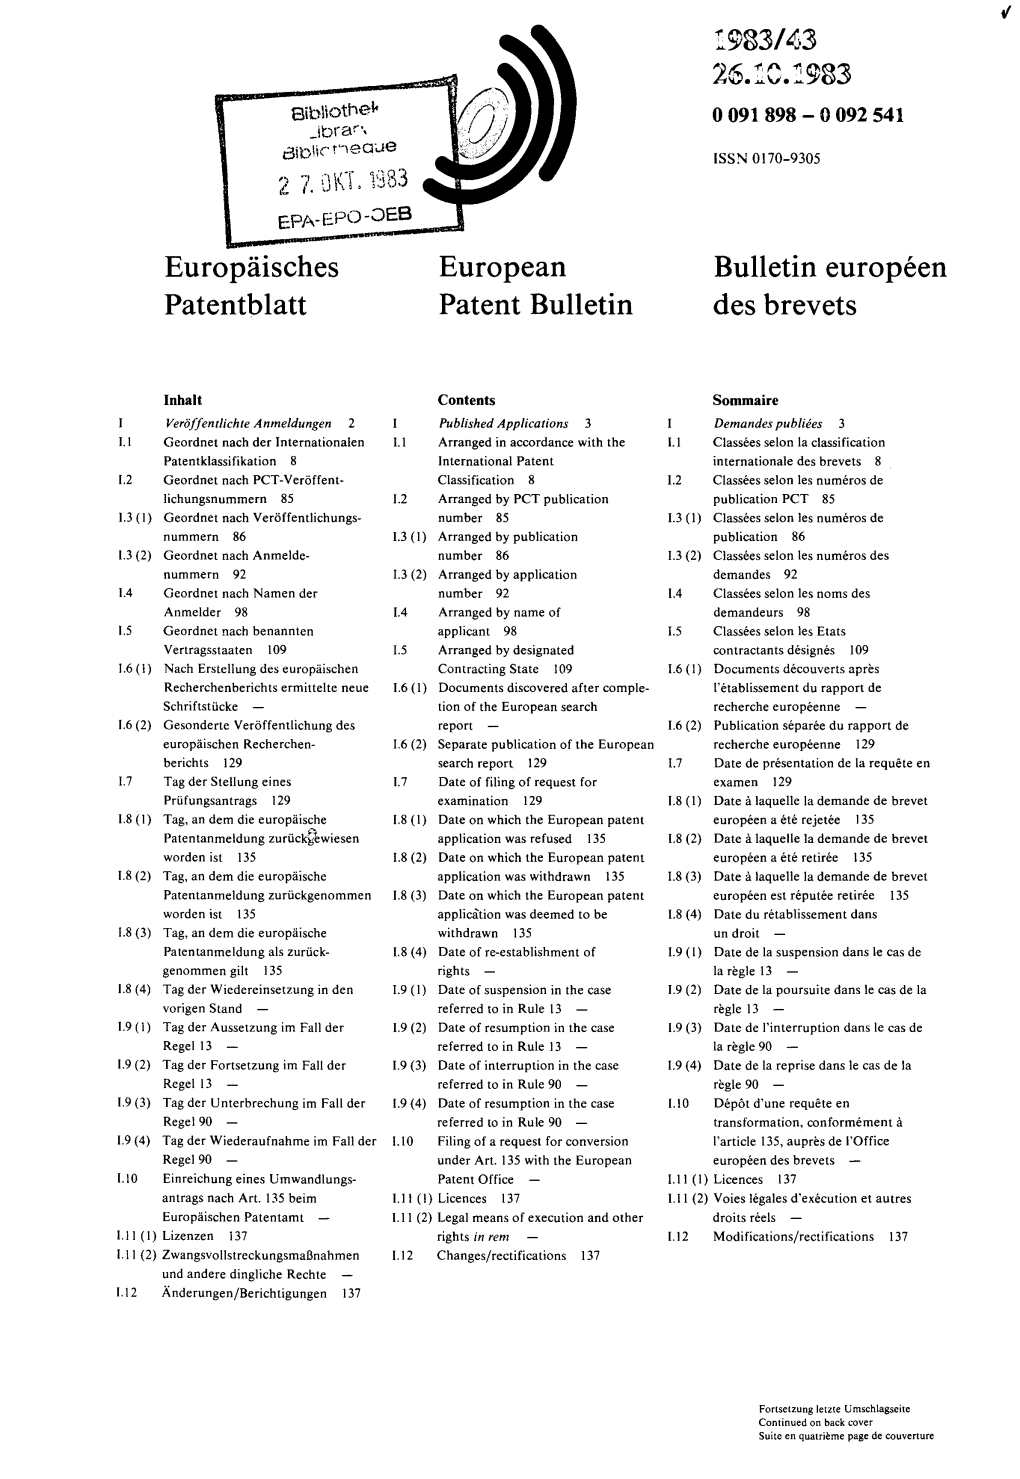 European Patent Bulletin 1983/43